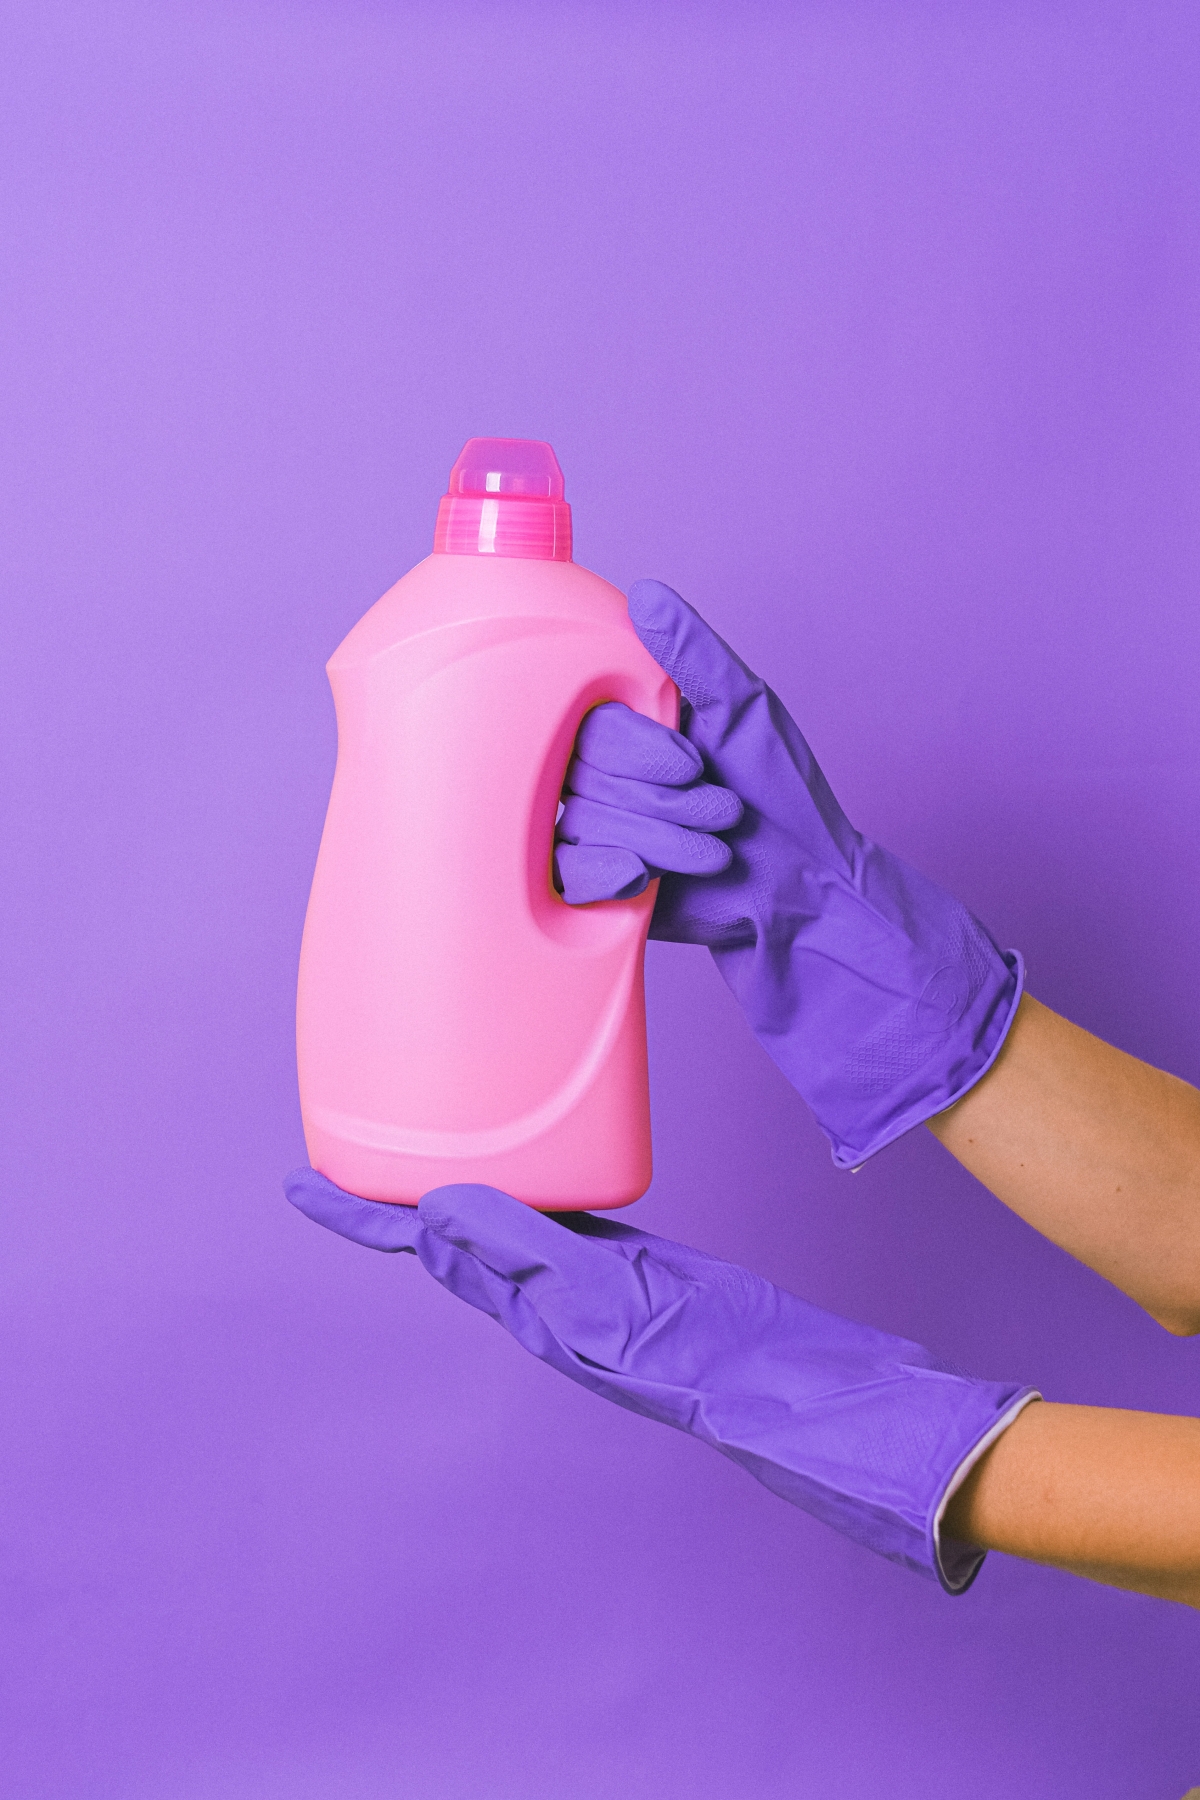 laundry detergent alternatives pink bottle of laundry detergent